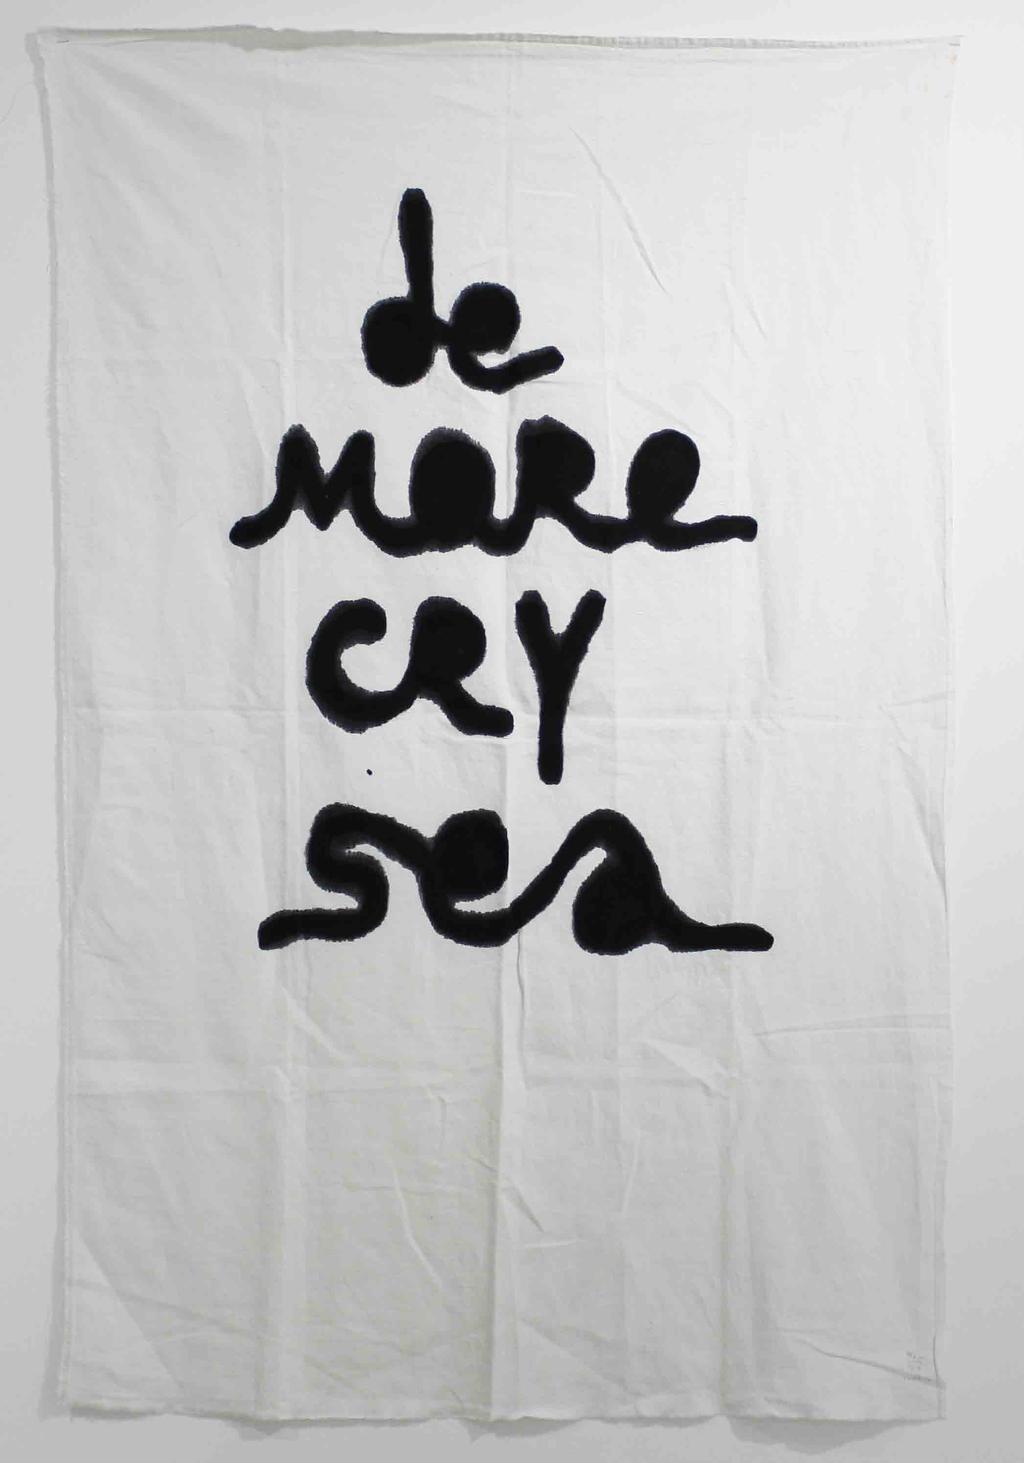 De More Cry Sea, 2018